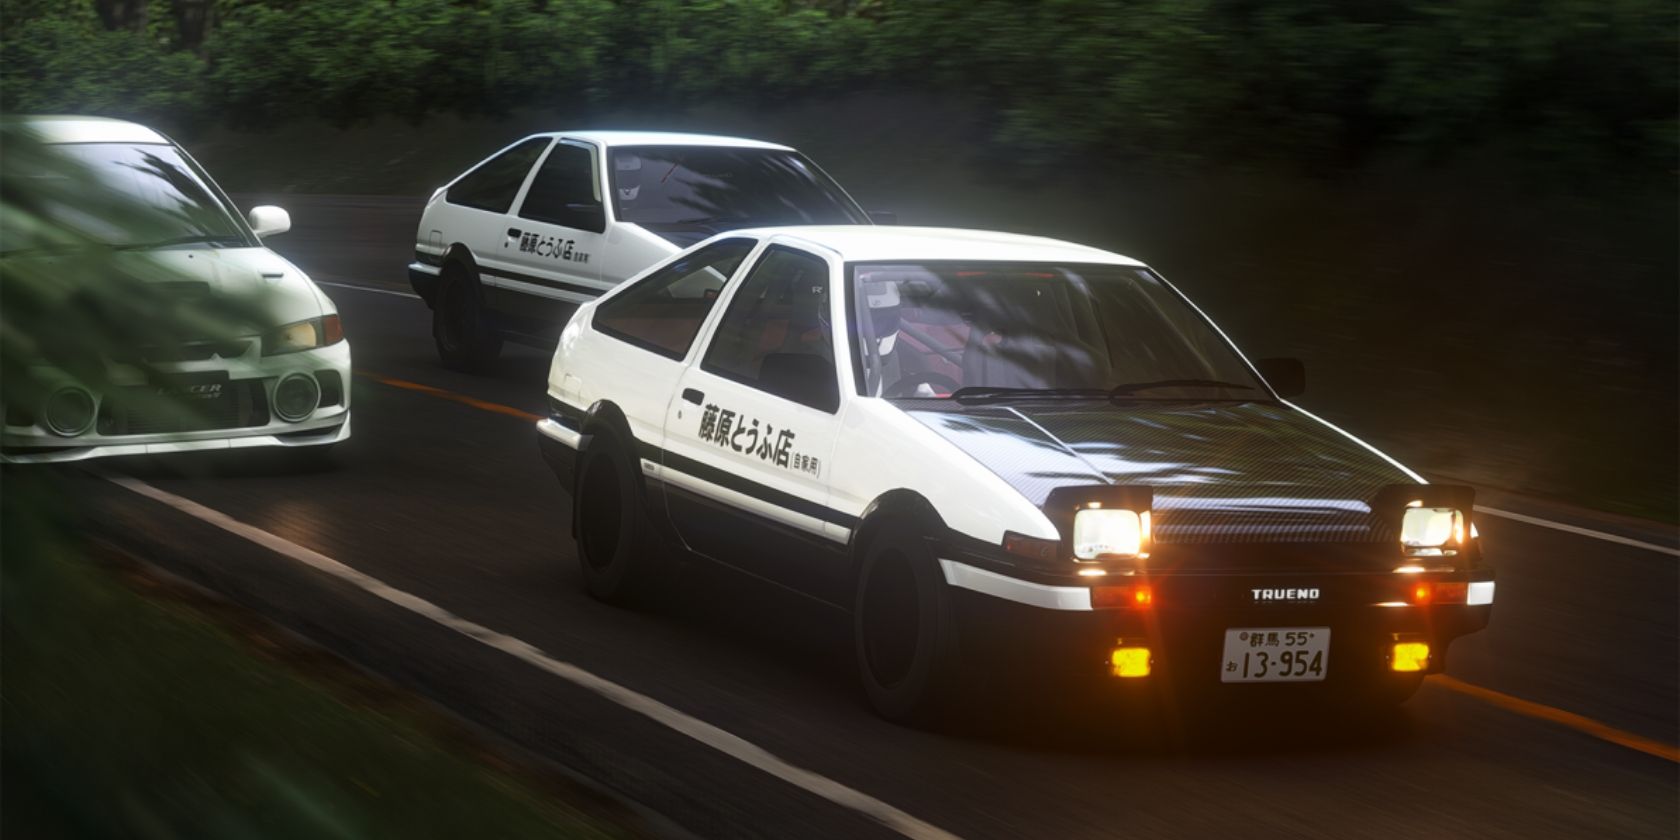 assetto corsa in game screenshot of three cars racing